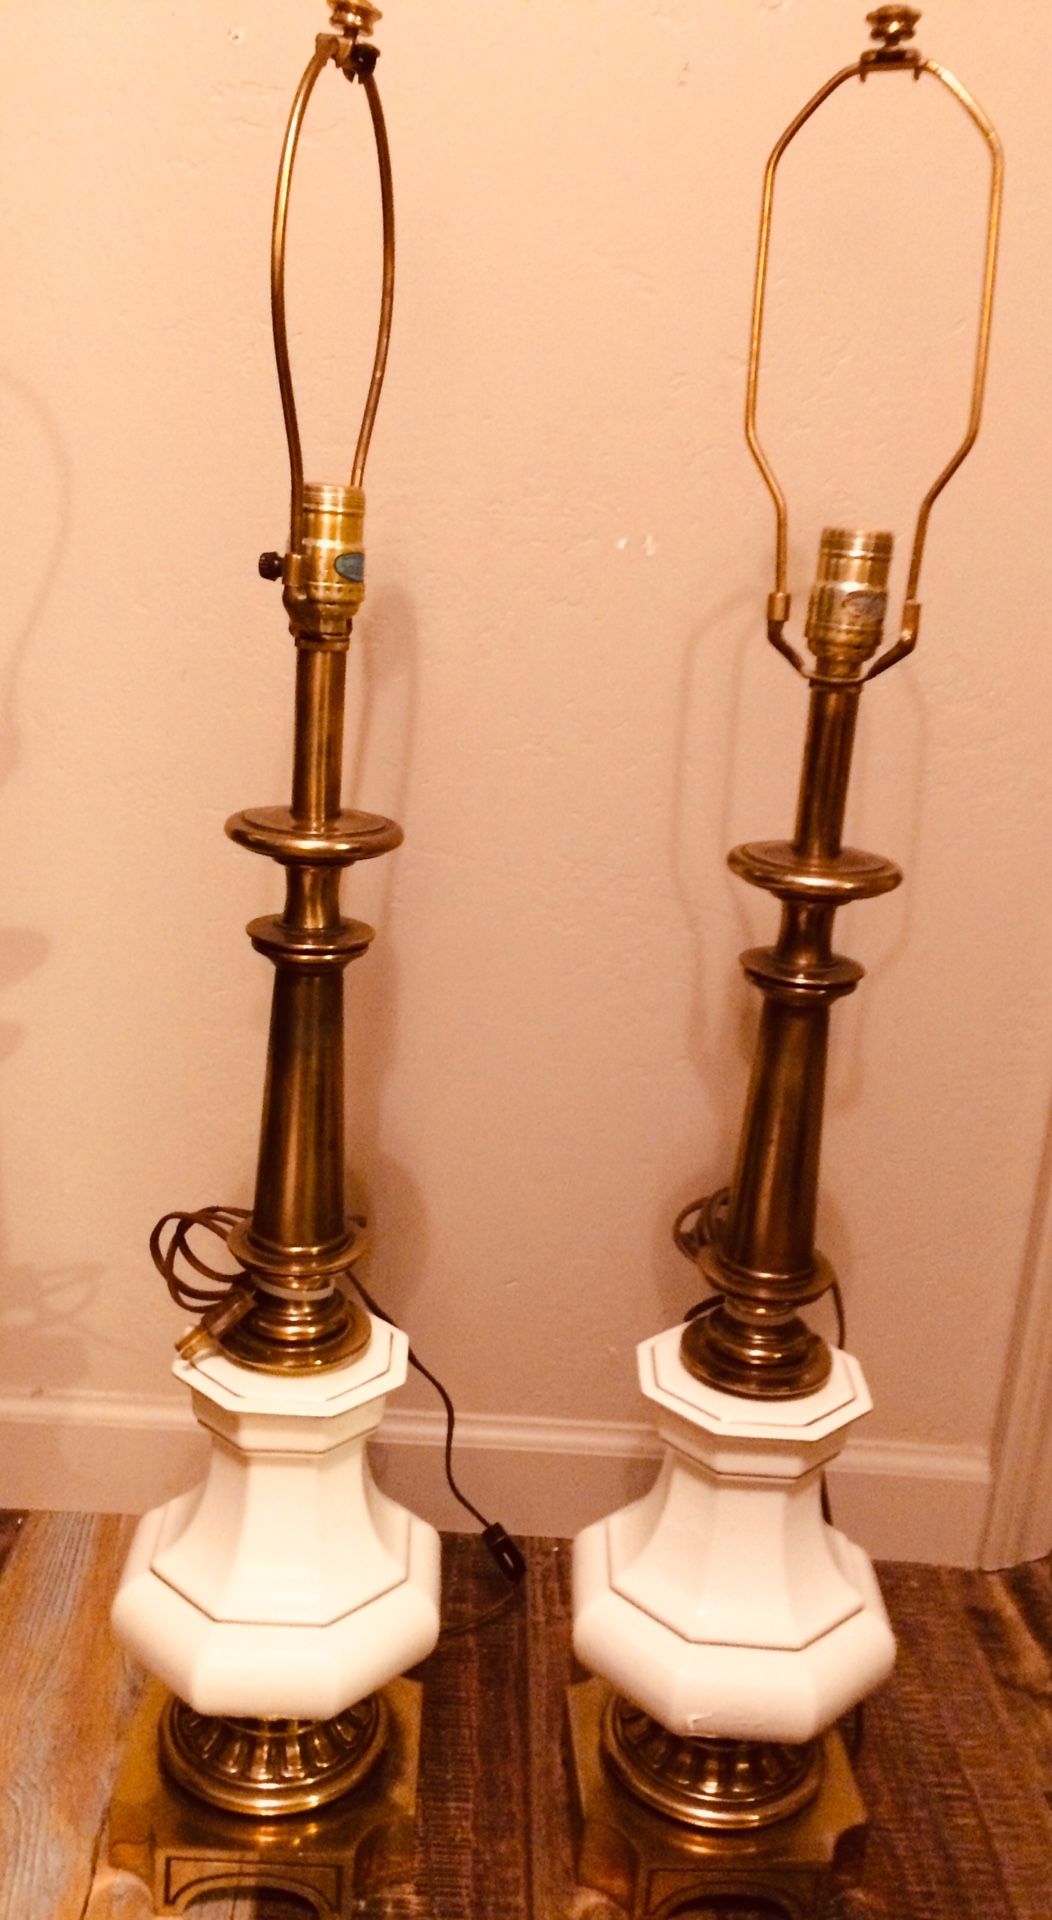 A Pair of Beautiful “Hollywood Regency” Stiffel Lamps